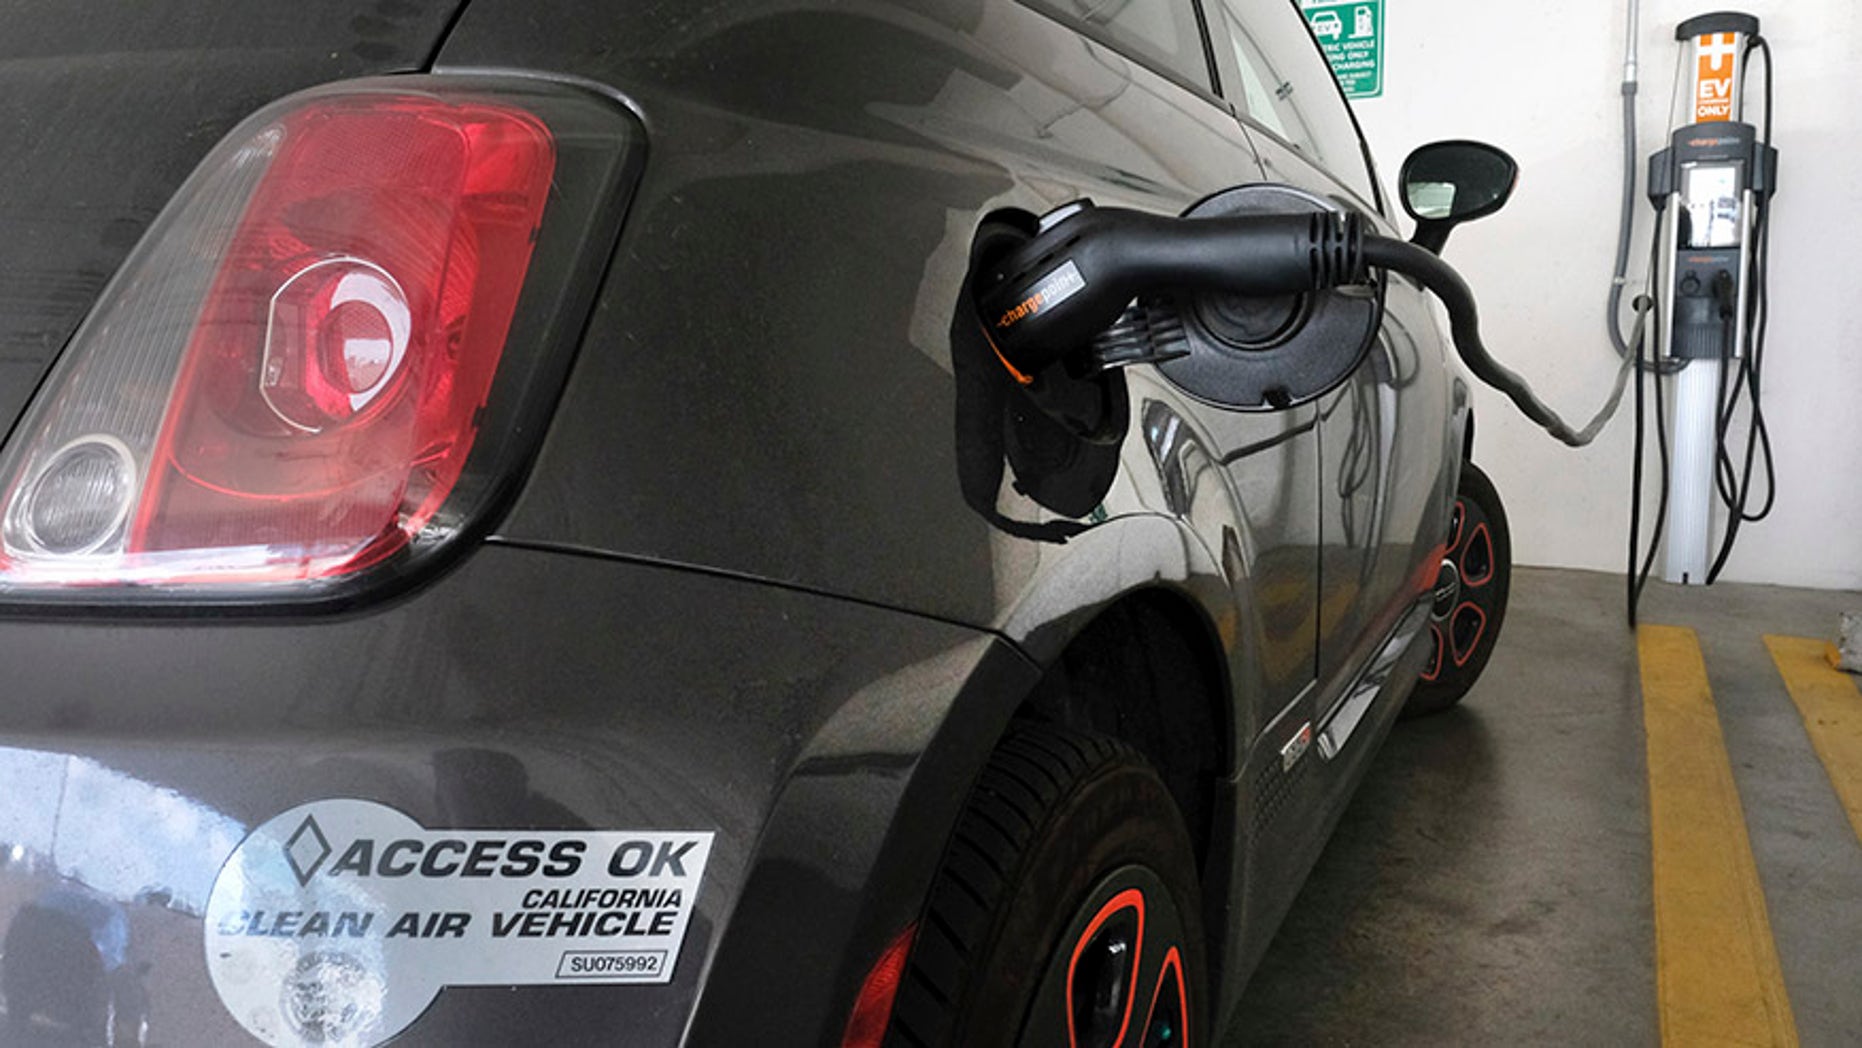 california-seeks-to-boost-electric-car-rebate-program-fox-news